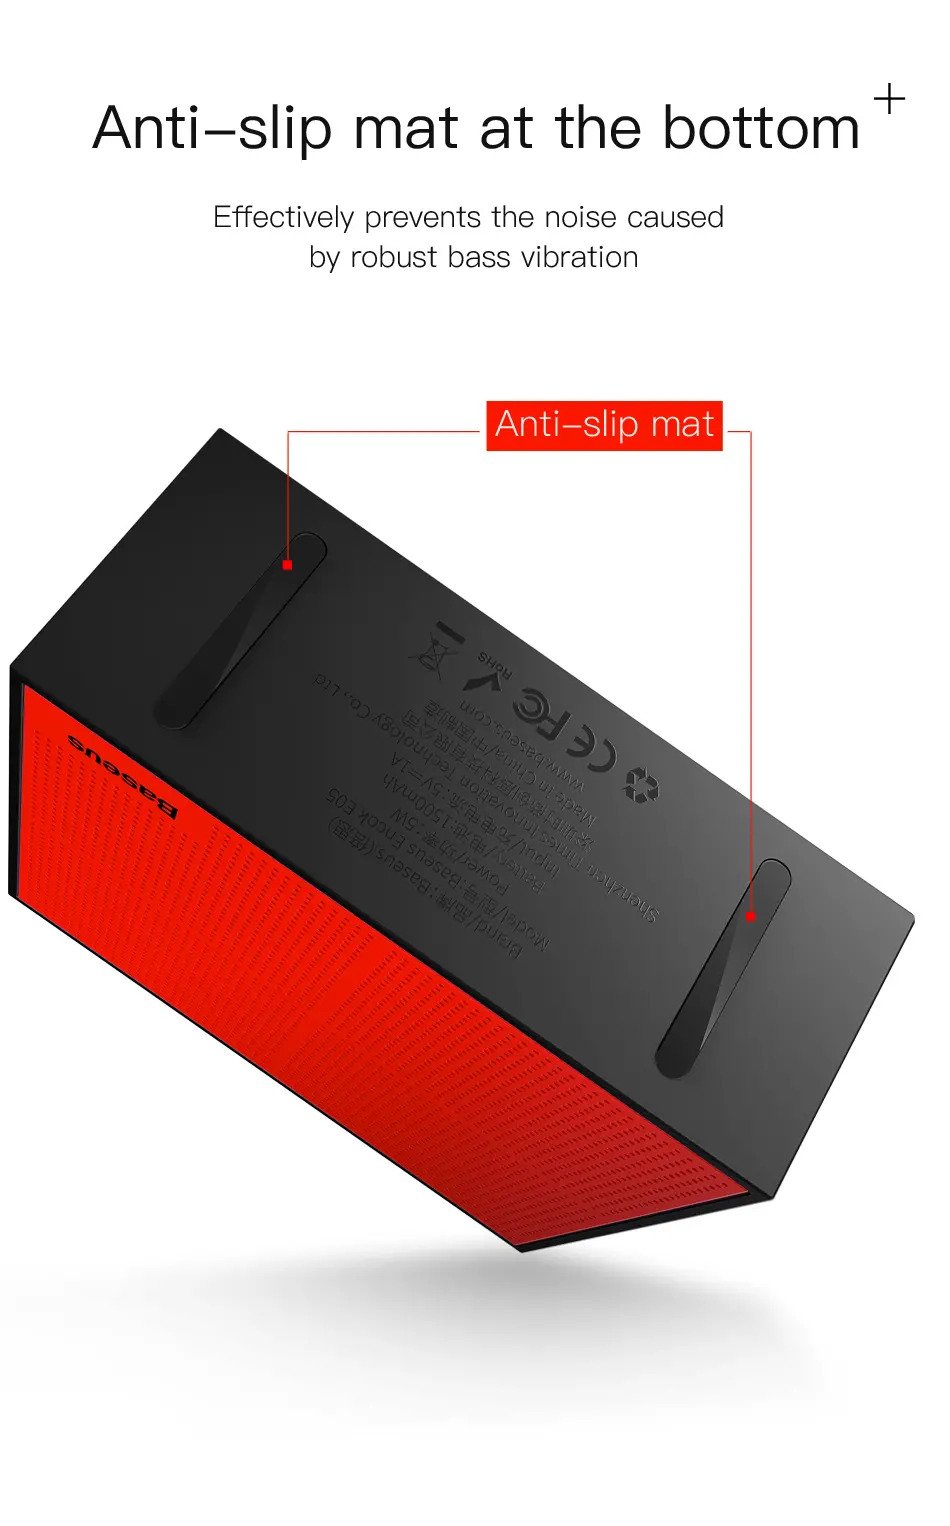 Boxa portabila Baseus NGE05-03, Rosu si albastru, 5W, Bluetooth 4.2, Baterie 1500 mAh, Mufa AUX, Incarcare USB